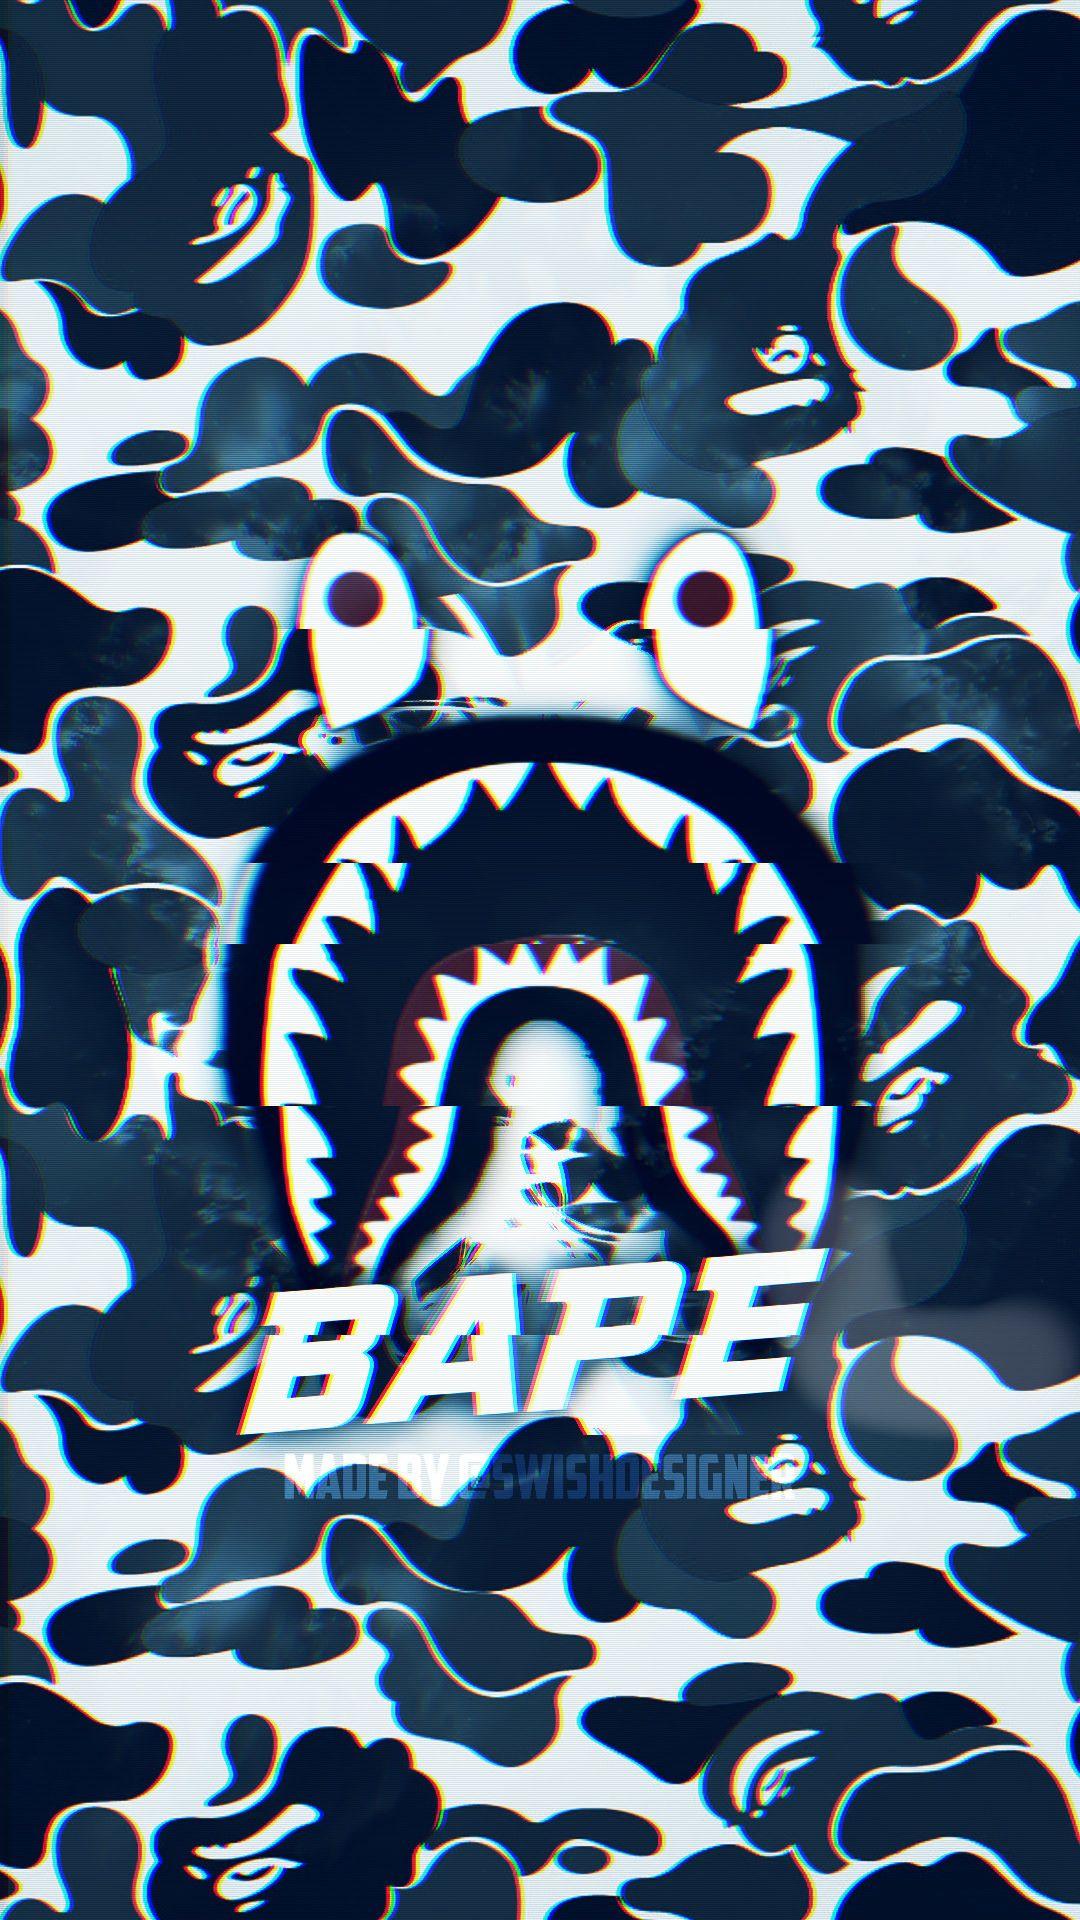 BAPE Phone Wallpapers - Top Free BAPE